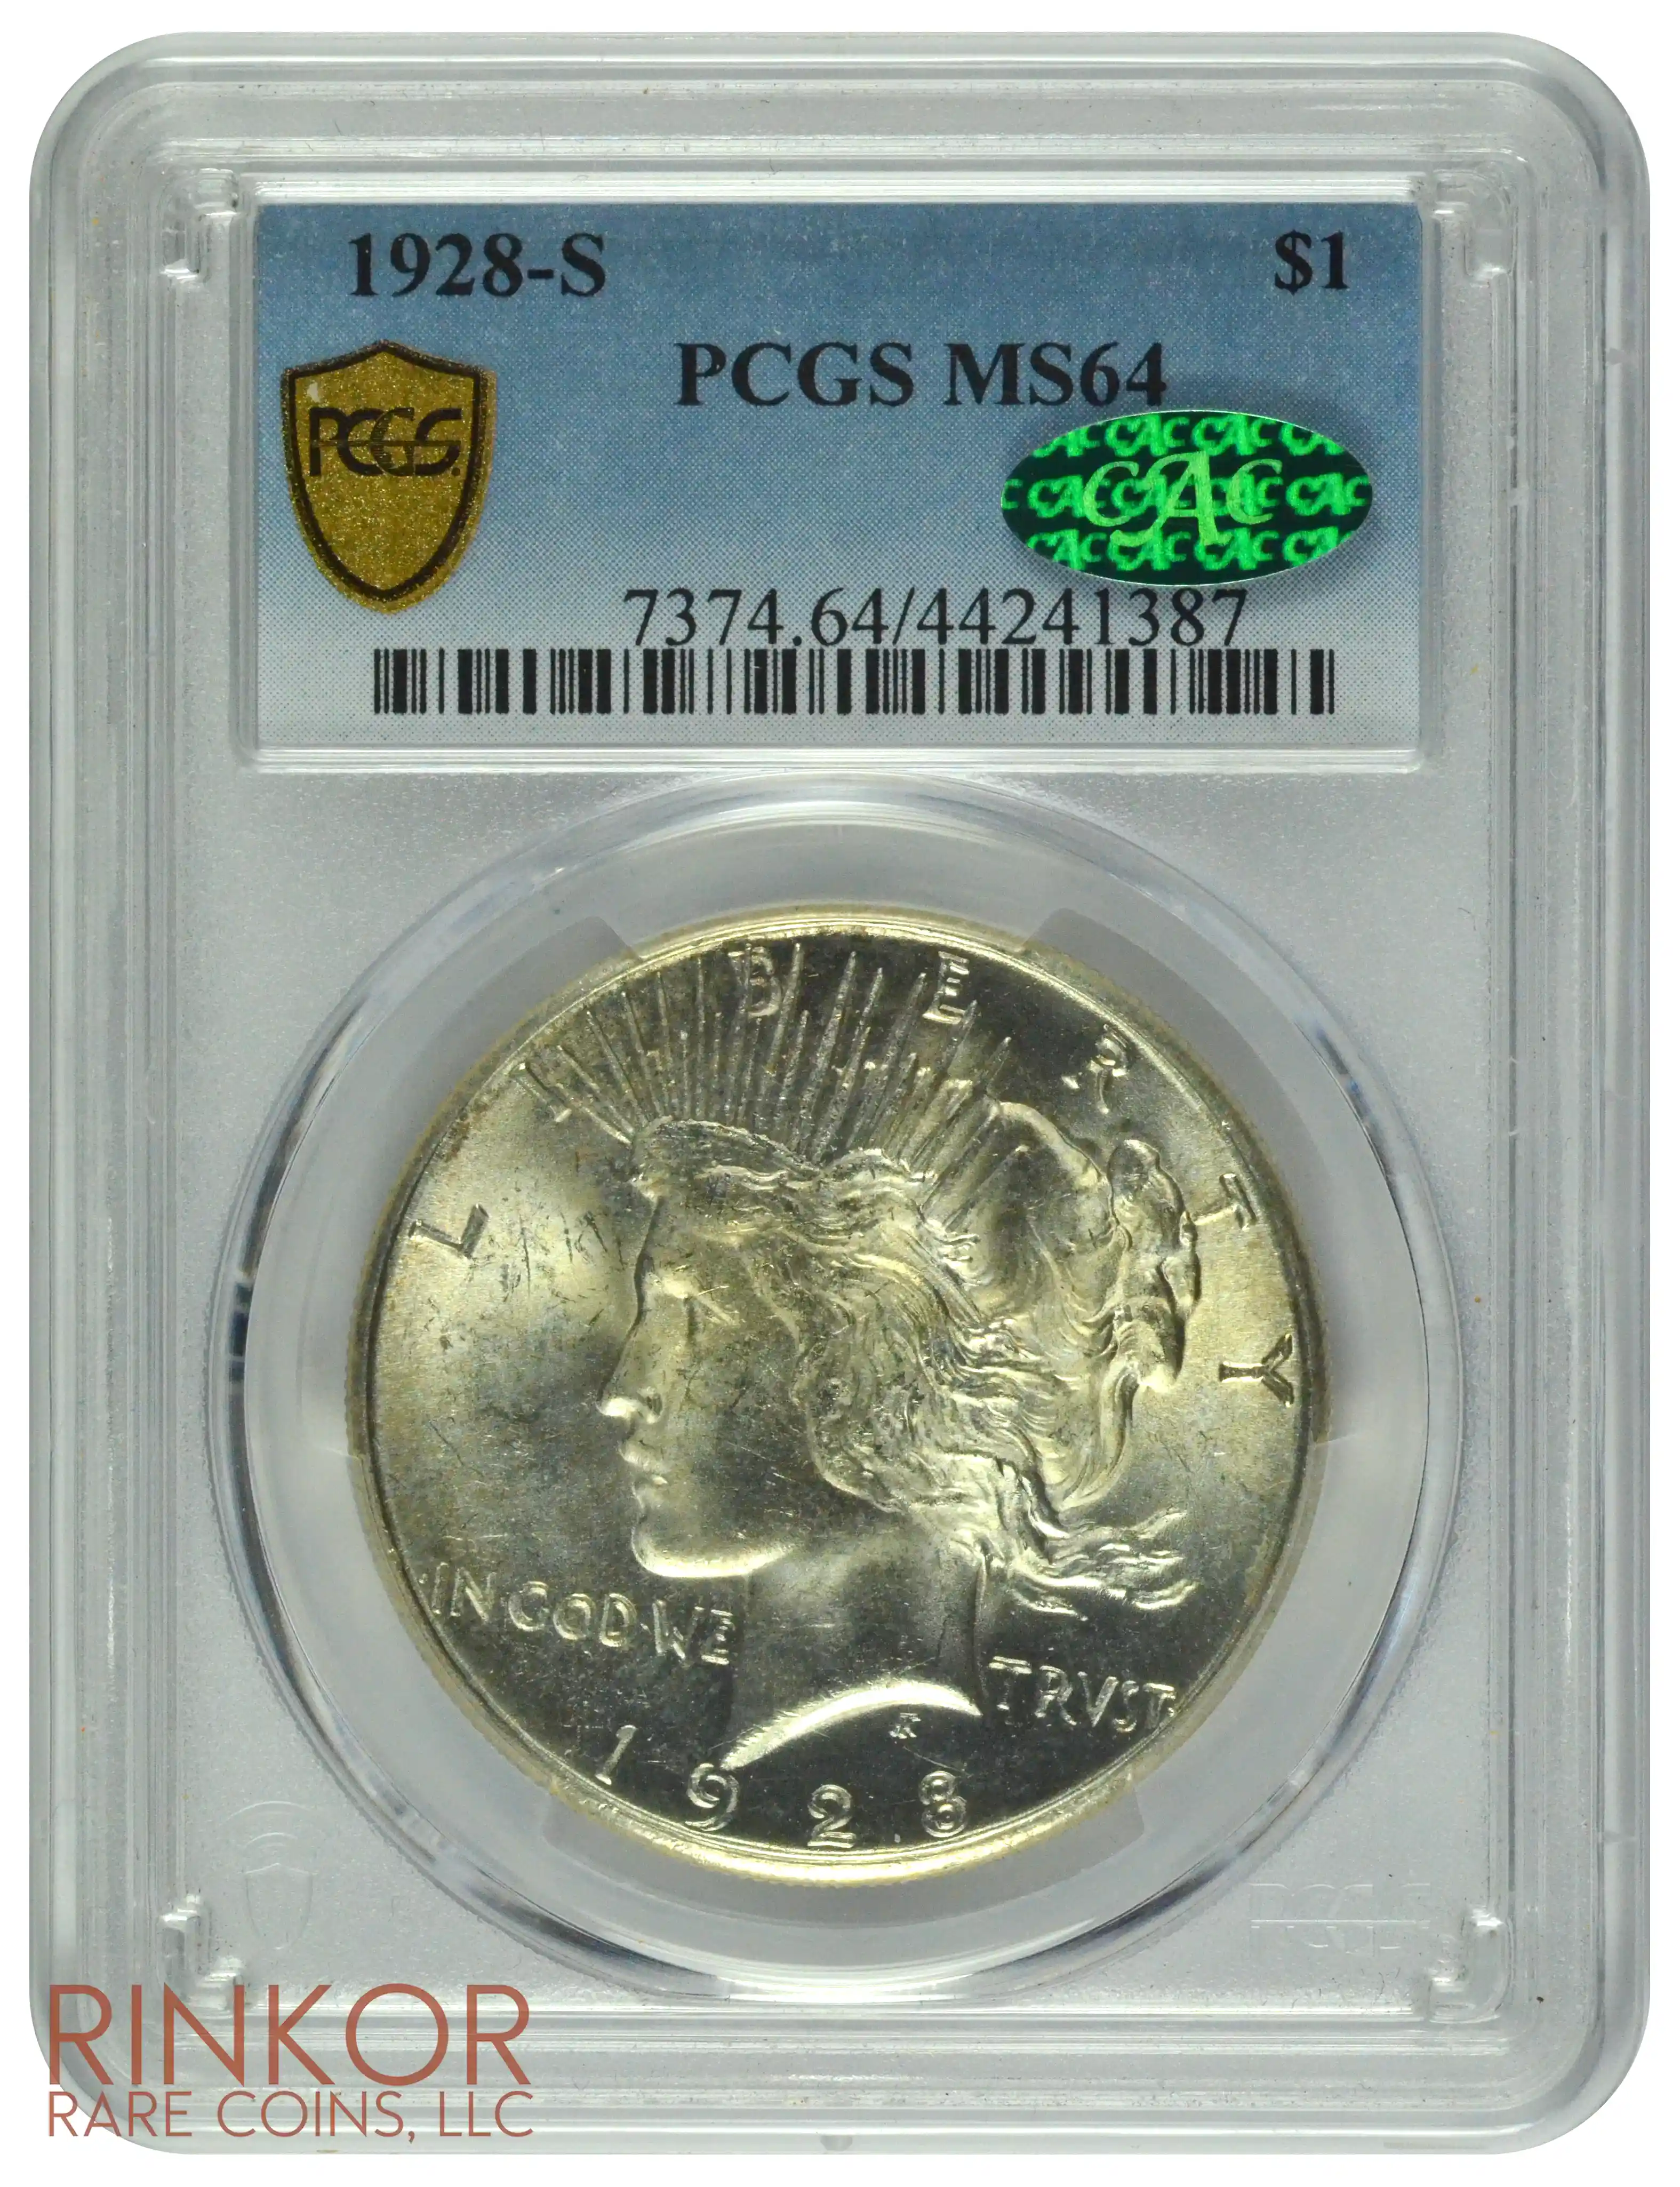 1928-S $1 PCGS MS 64 CAC